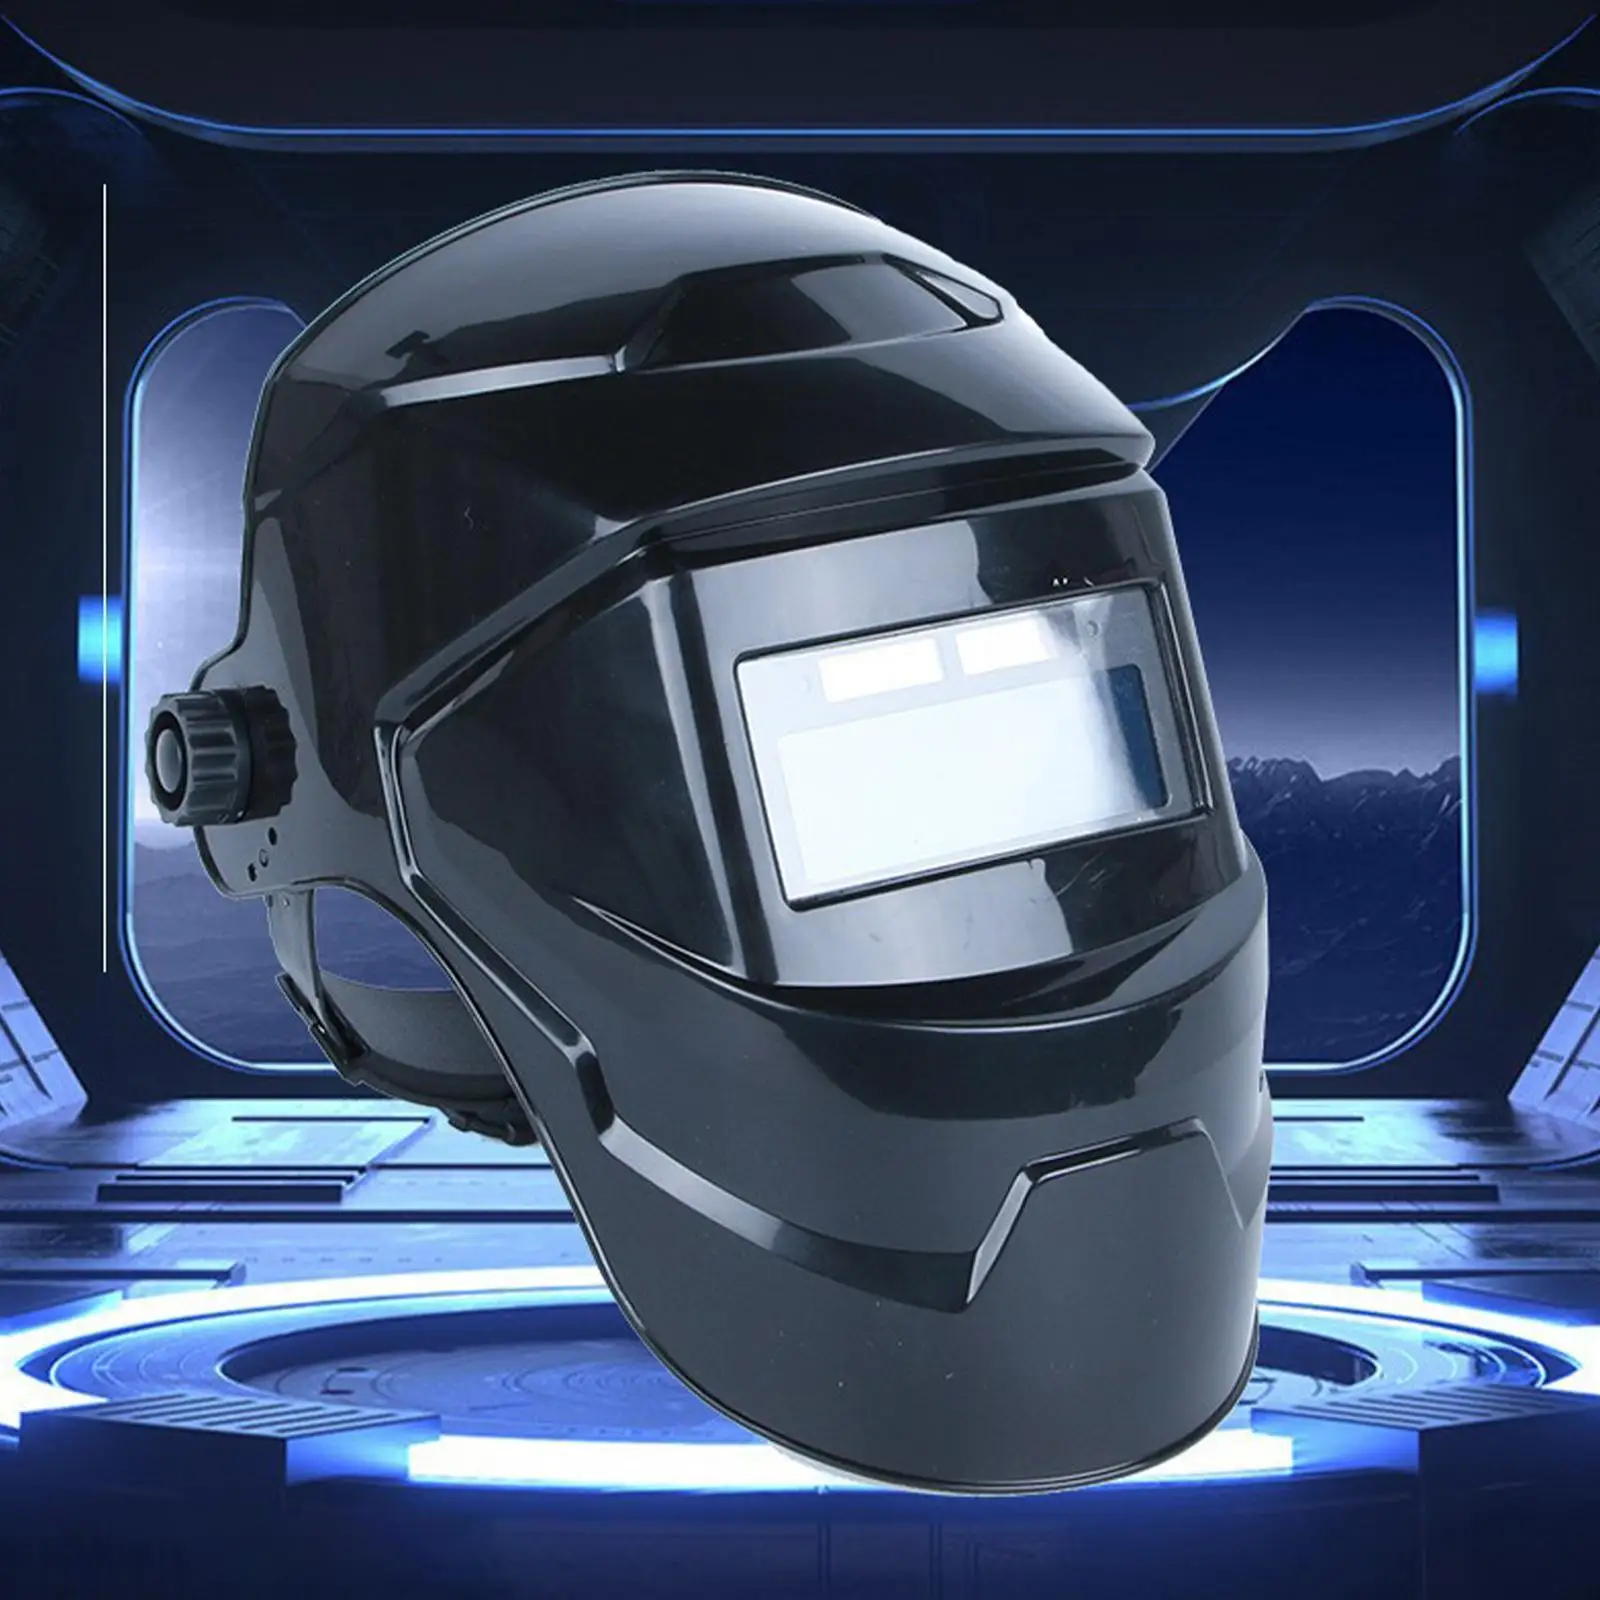 Large Viewing Auto Darkening Welding Helmet Breathable Wide Shade Range Lightweight Welding Helmet Welder Mask for TIG Mig ARC